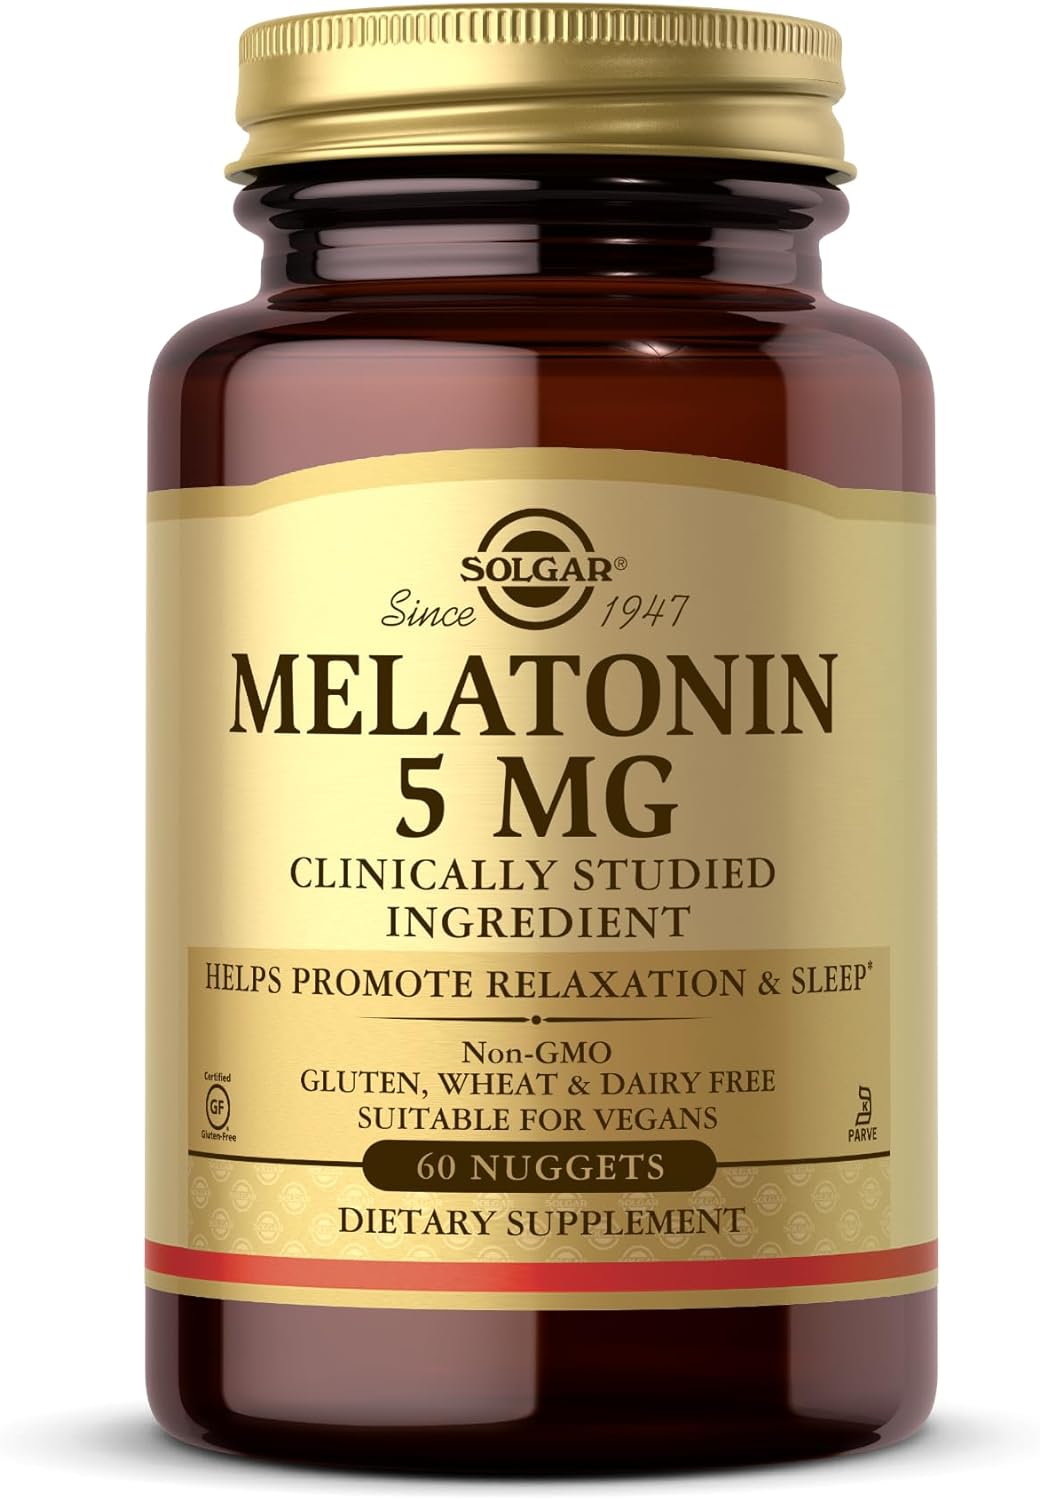 Solgar Melatonin 5 mg - 60 Nuggets - Helps Promote Relaxation & Rest - Non-GMO, Vegan, Gluten Free, Dairy Free, Kosher - 60 Servings